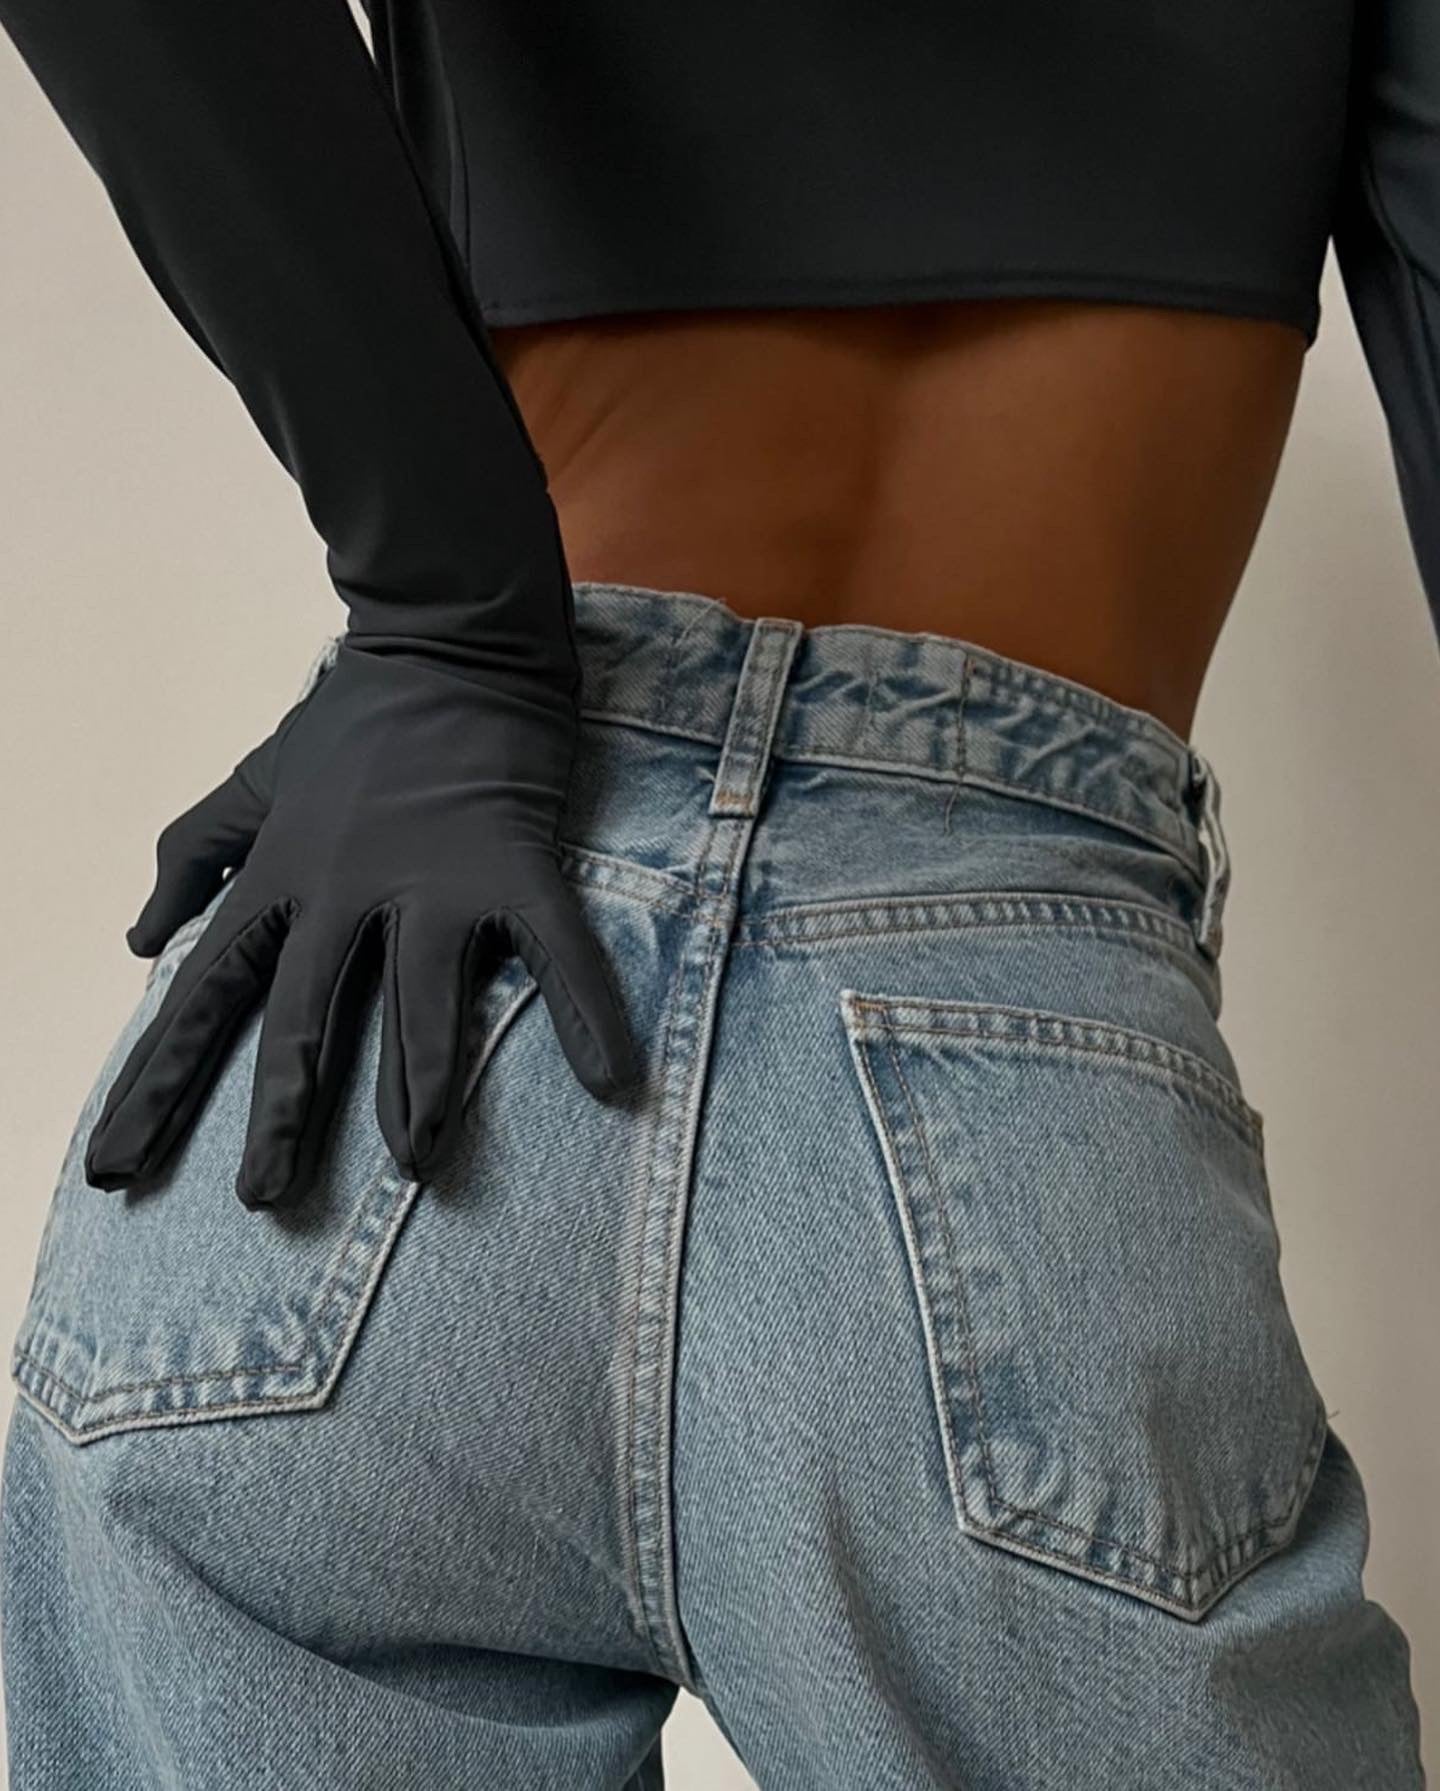 Gloves sleeve top